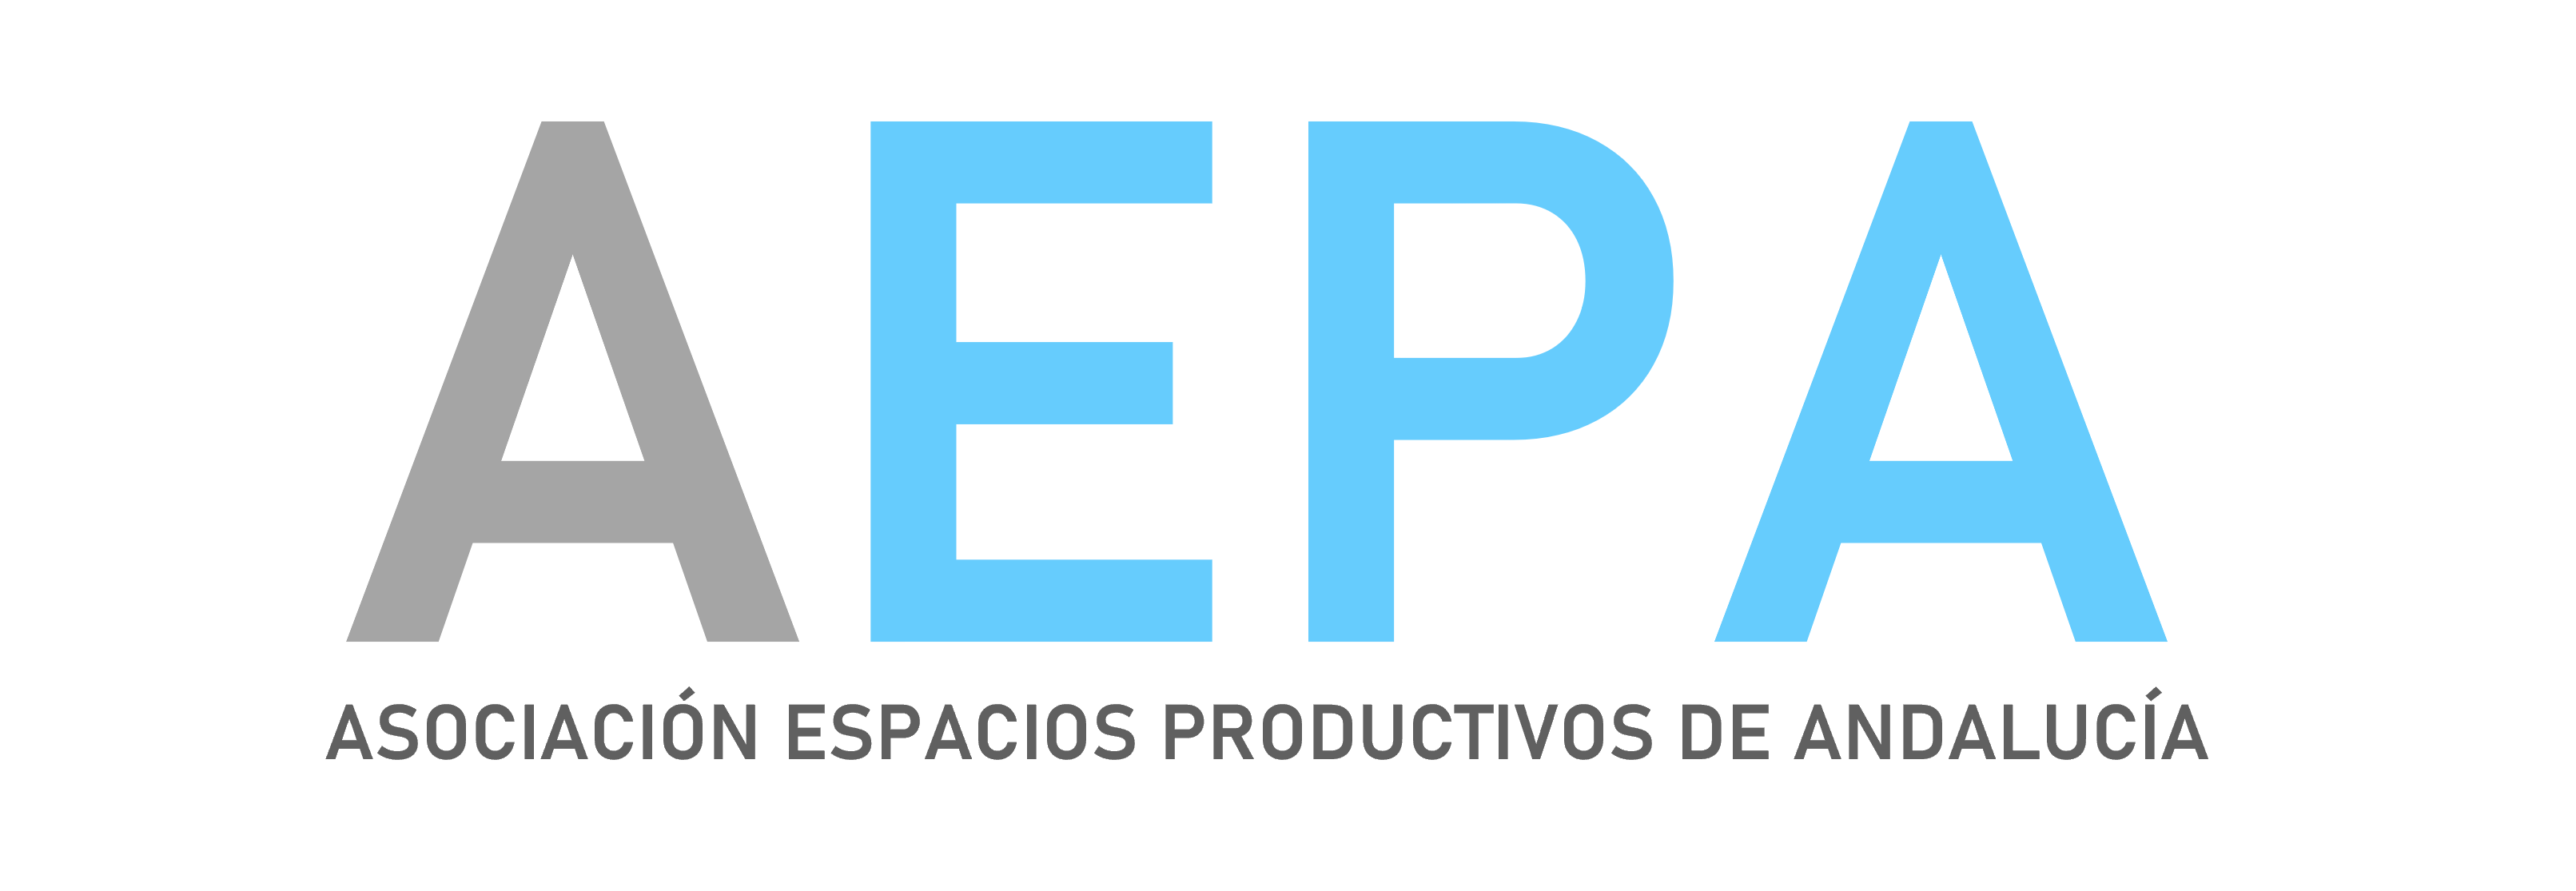 AEPA Andalucía